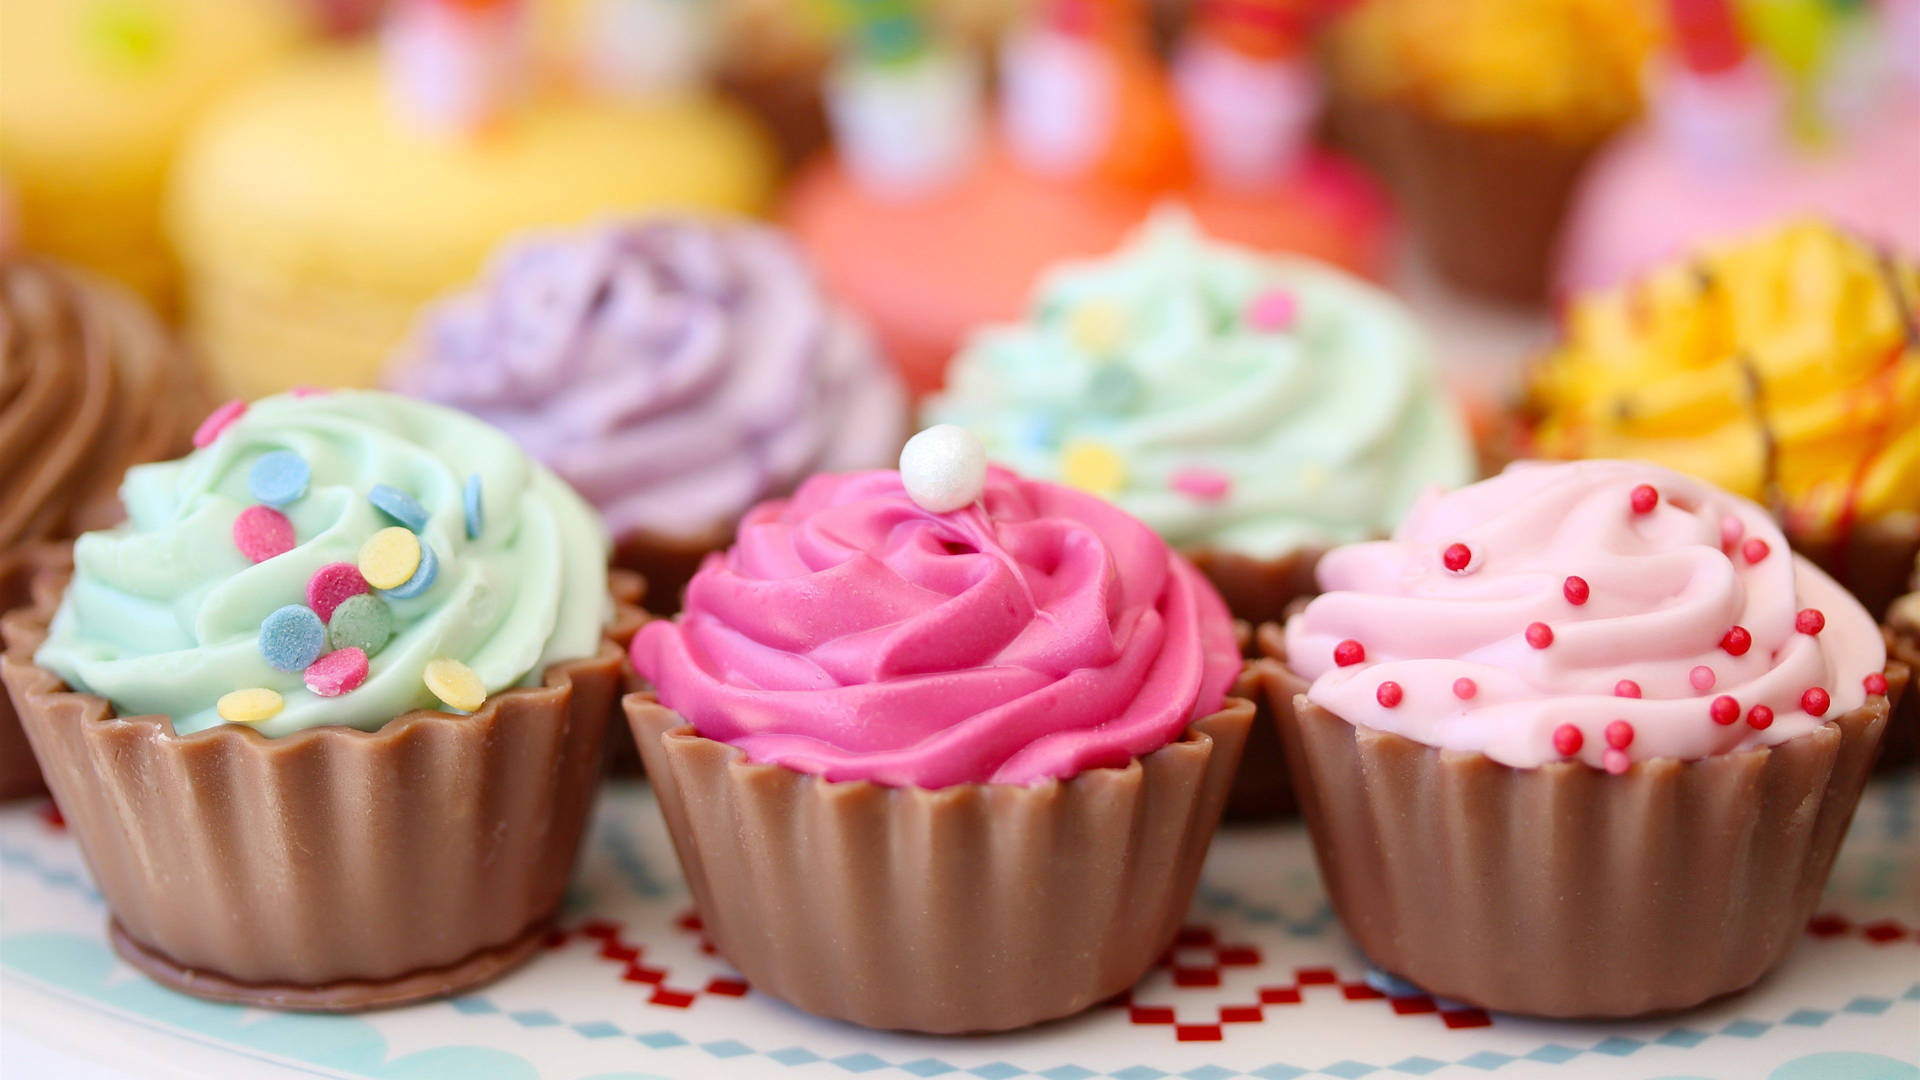 Colorful Cupcake Desserts Wallpaper